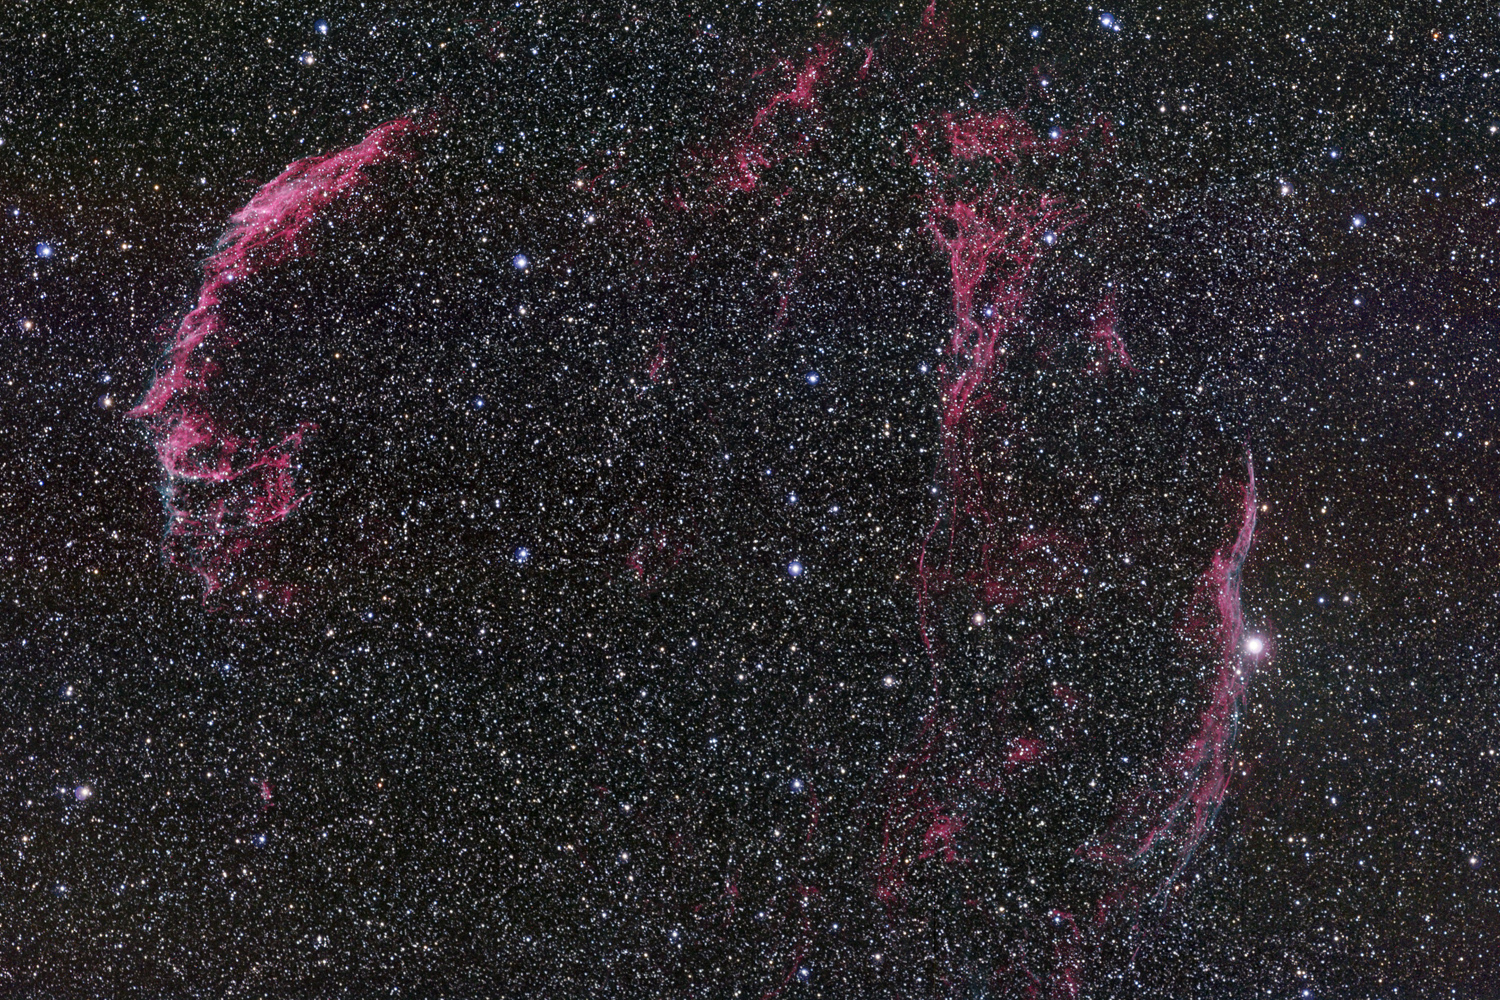 Veil Nebula in HaRGB